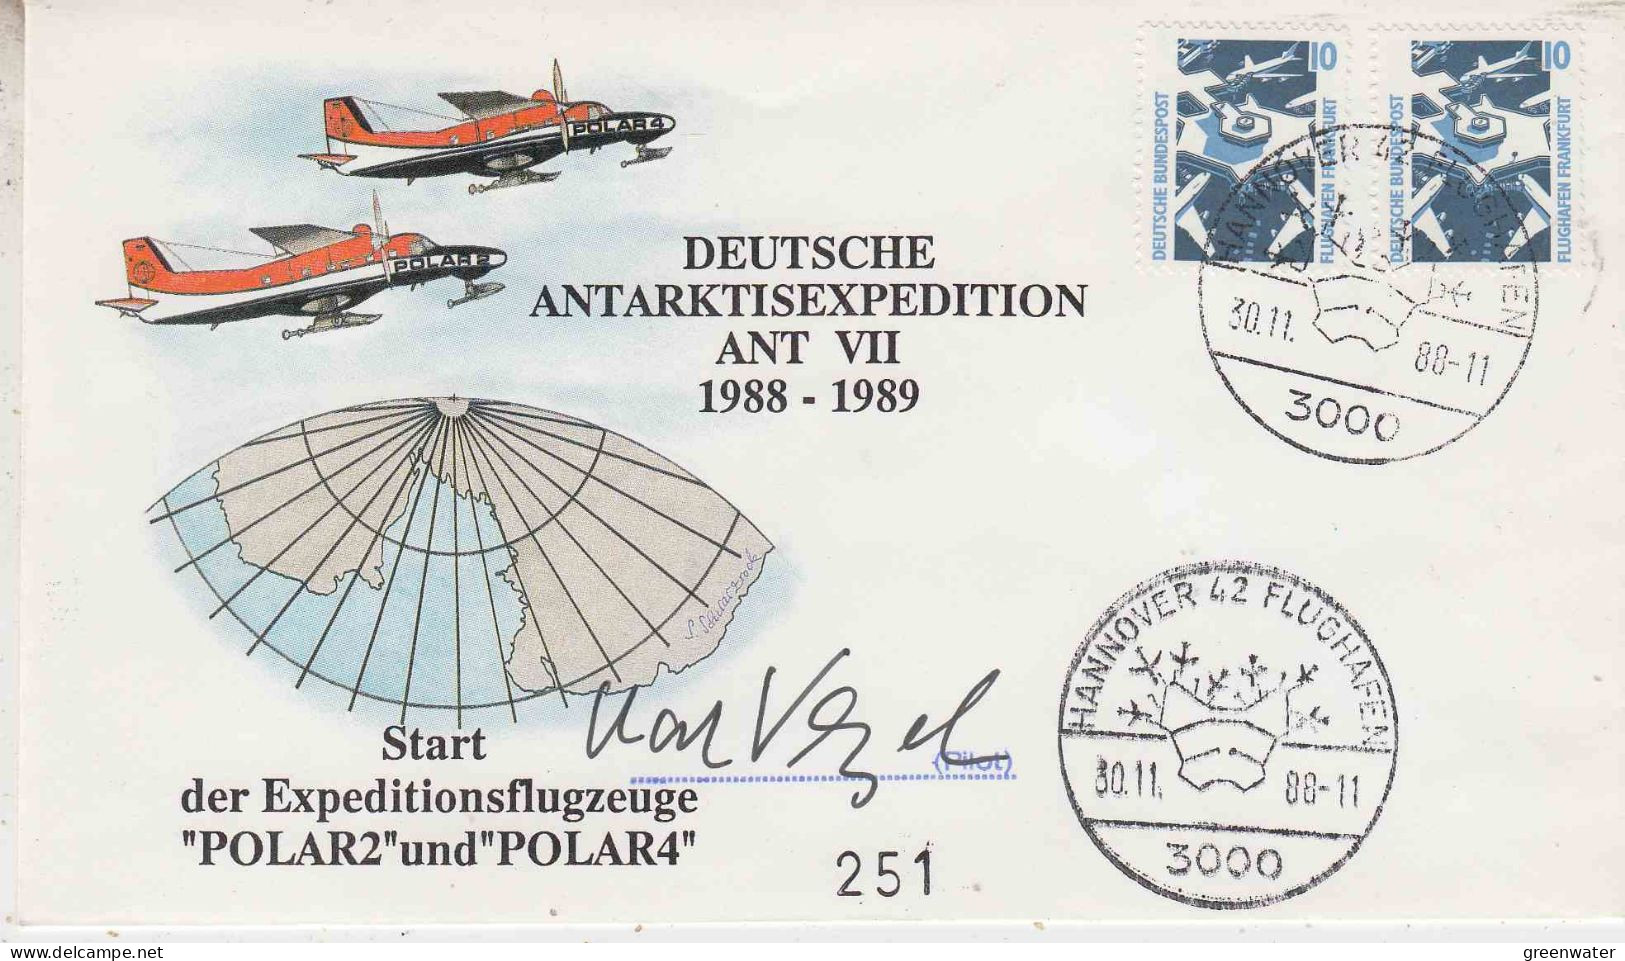 Germany 1988 Deutsche Antarktisexp Ant VII 1988-1989 Start Expeditionsflugzeuge Polar 2 & Polar 4 Cover Signature(PT162) - Vuelos Polares